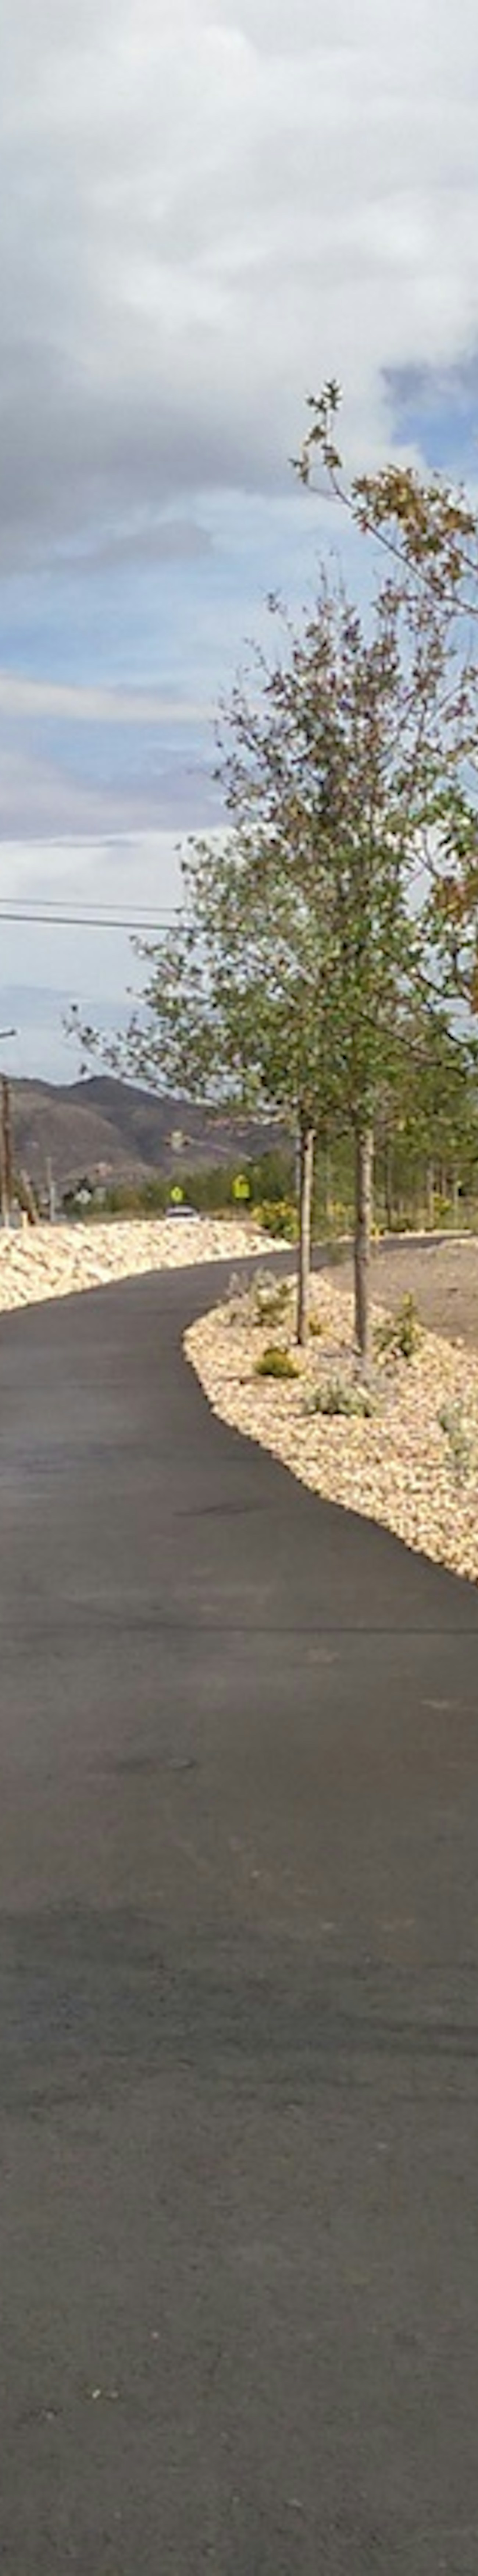                         El Paso River Bend Drive Pedestrian Bicycle Enhancements
                    